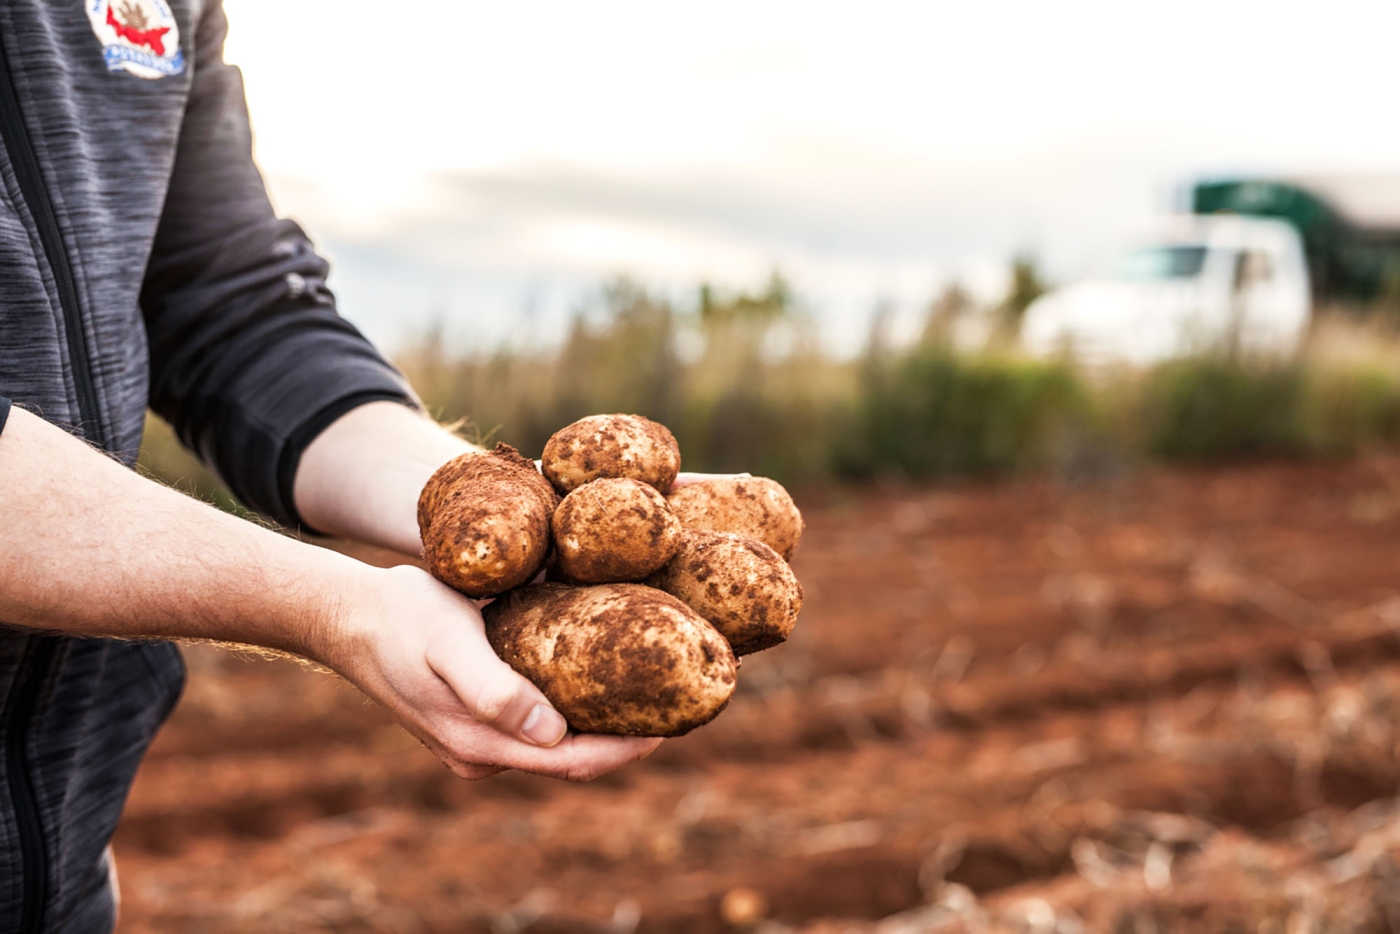 Potato harvesting, red dirt, potato field